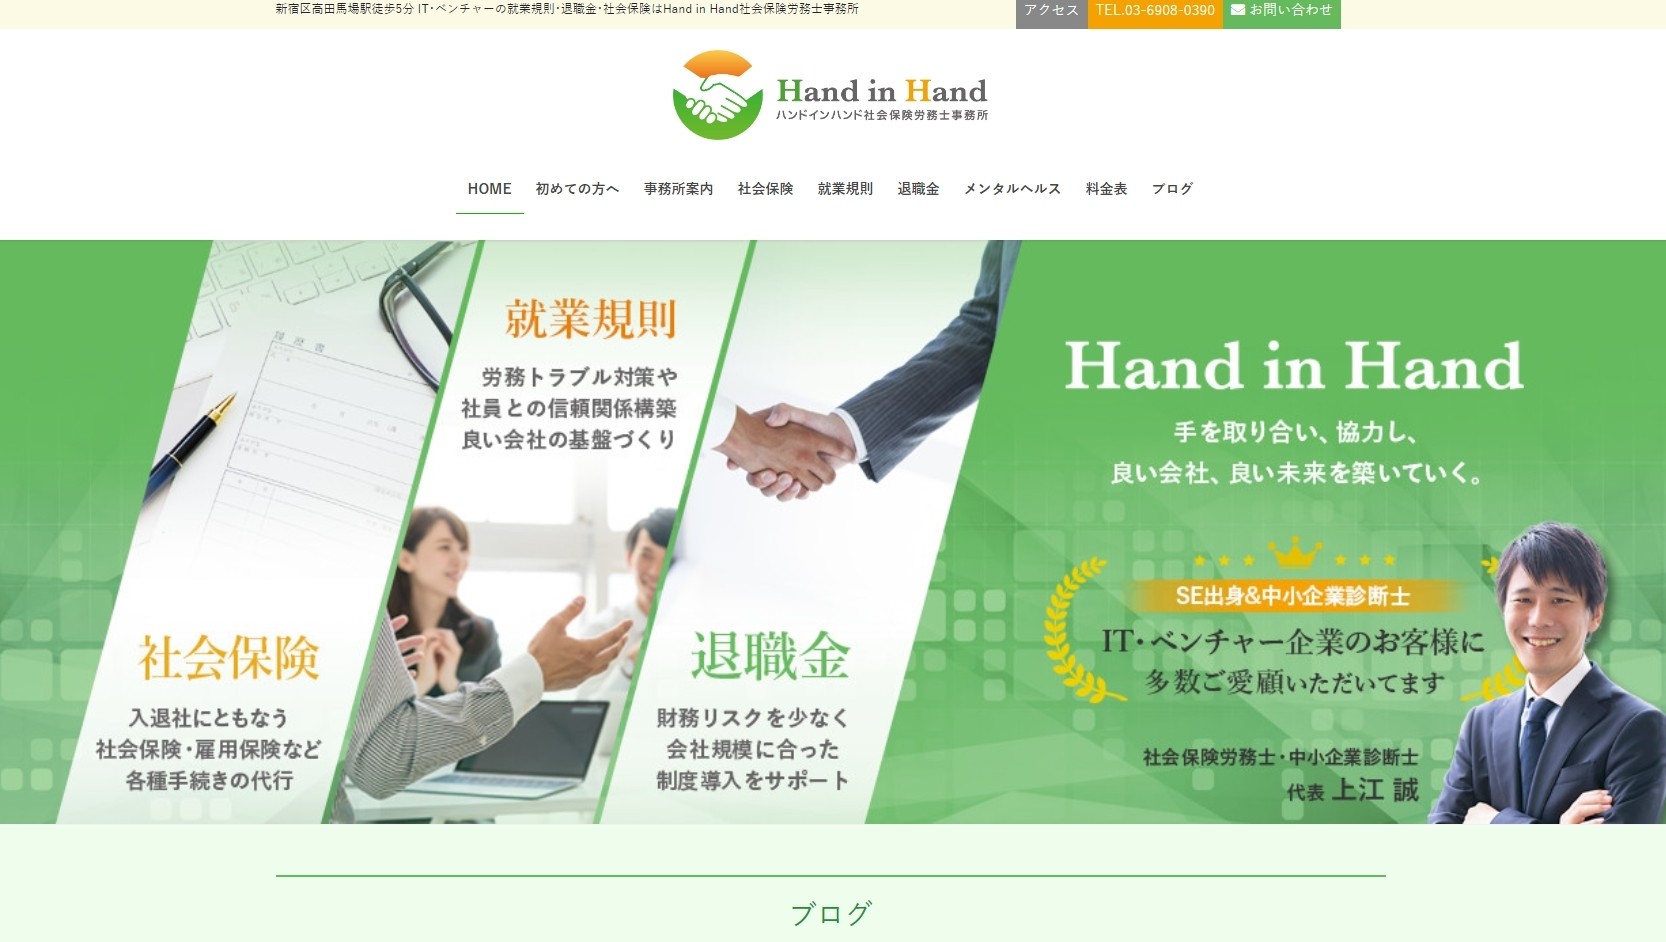 Hand in Hand社会保険労務士事務所のHand in Hand社会保険労務士事務所サービス